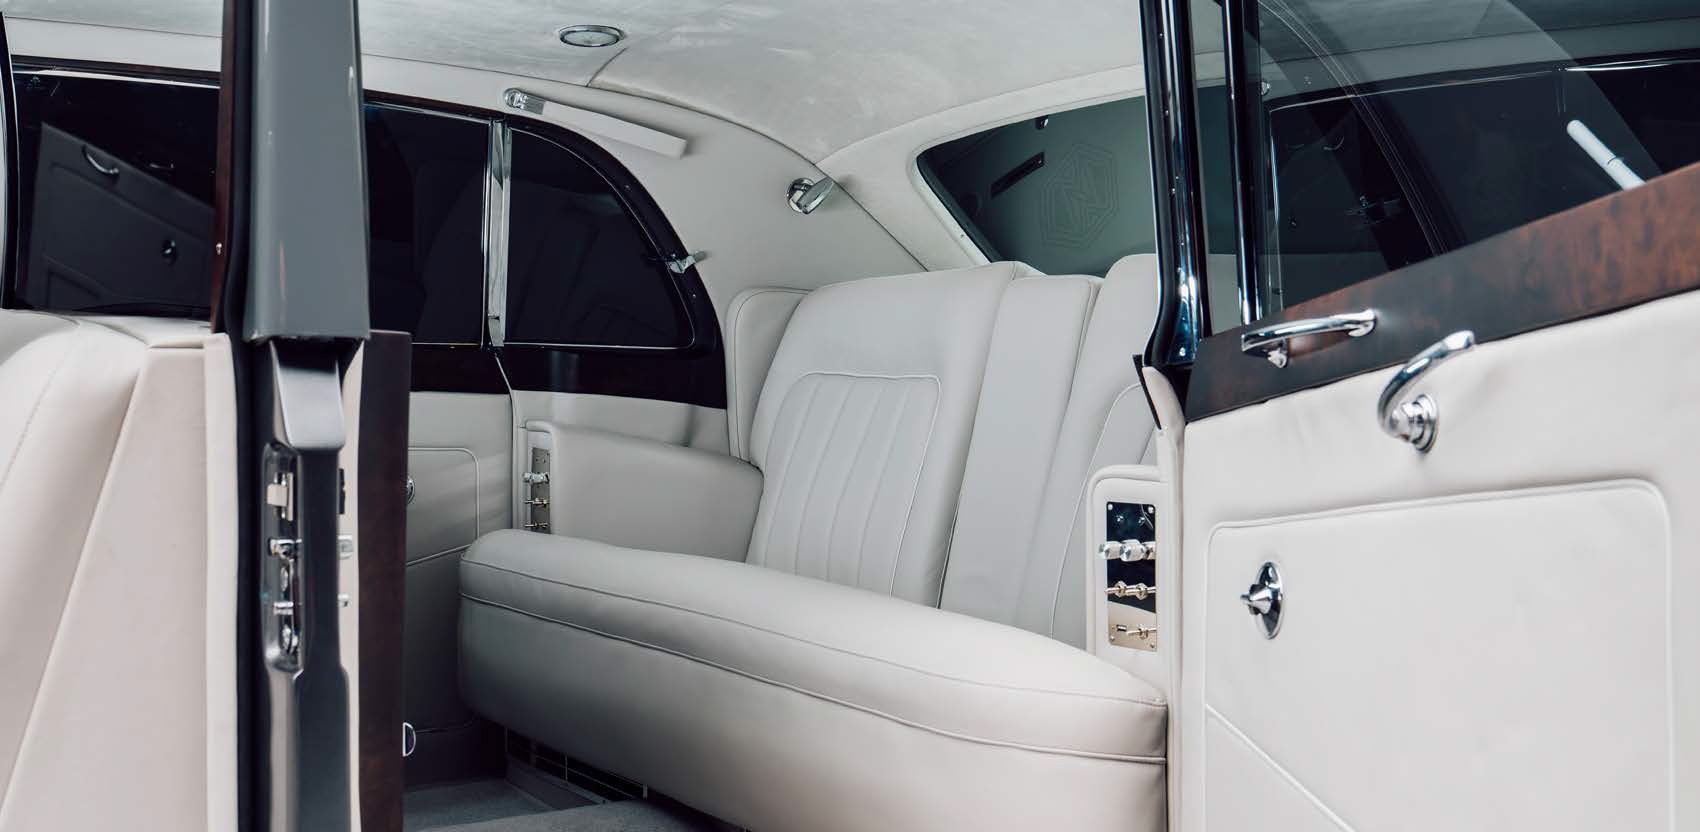 Rolls-Royce - Lunaz Design